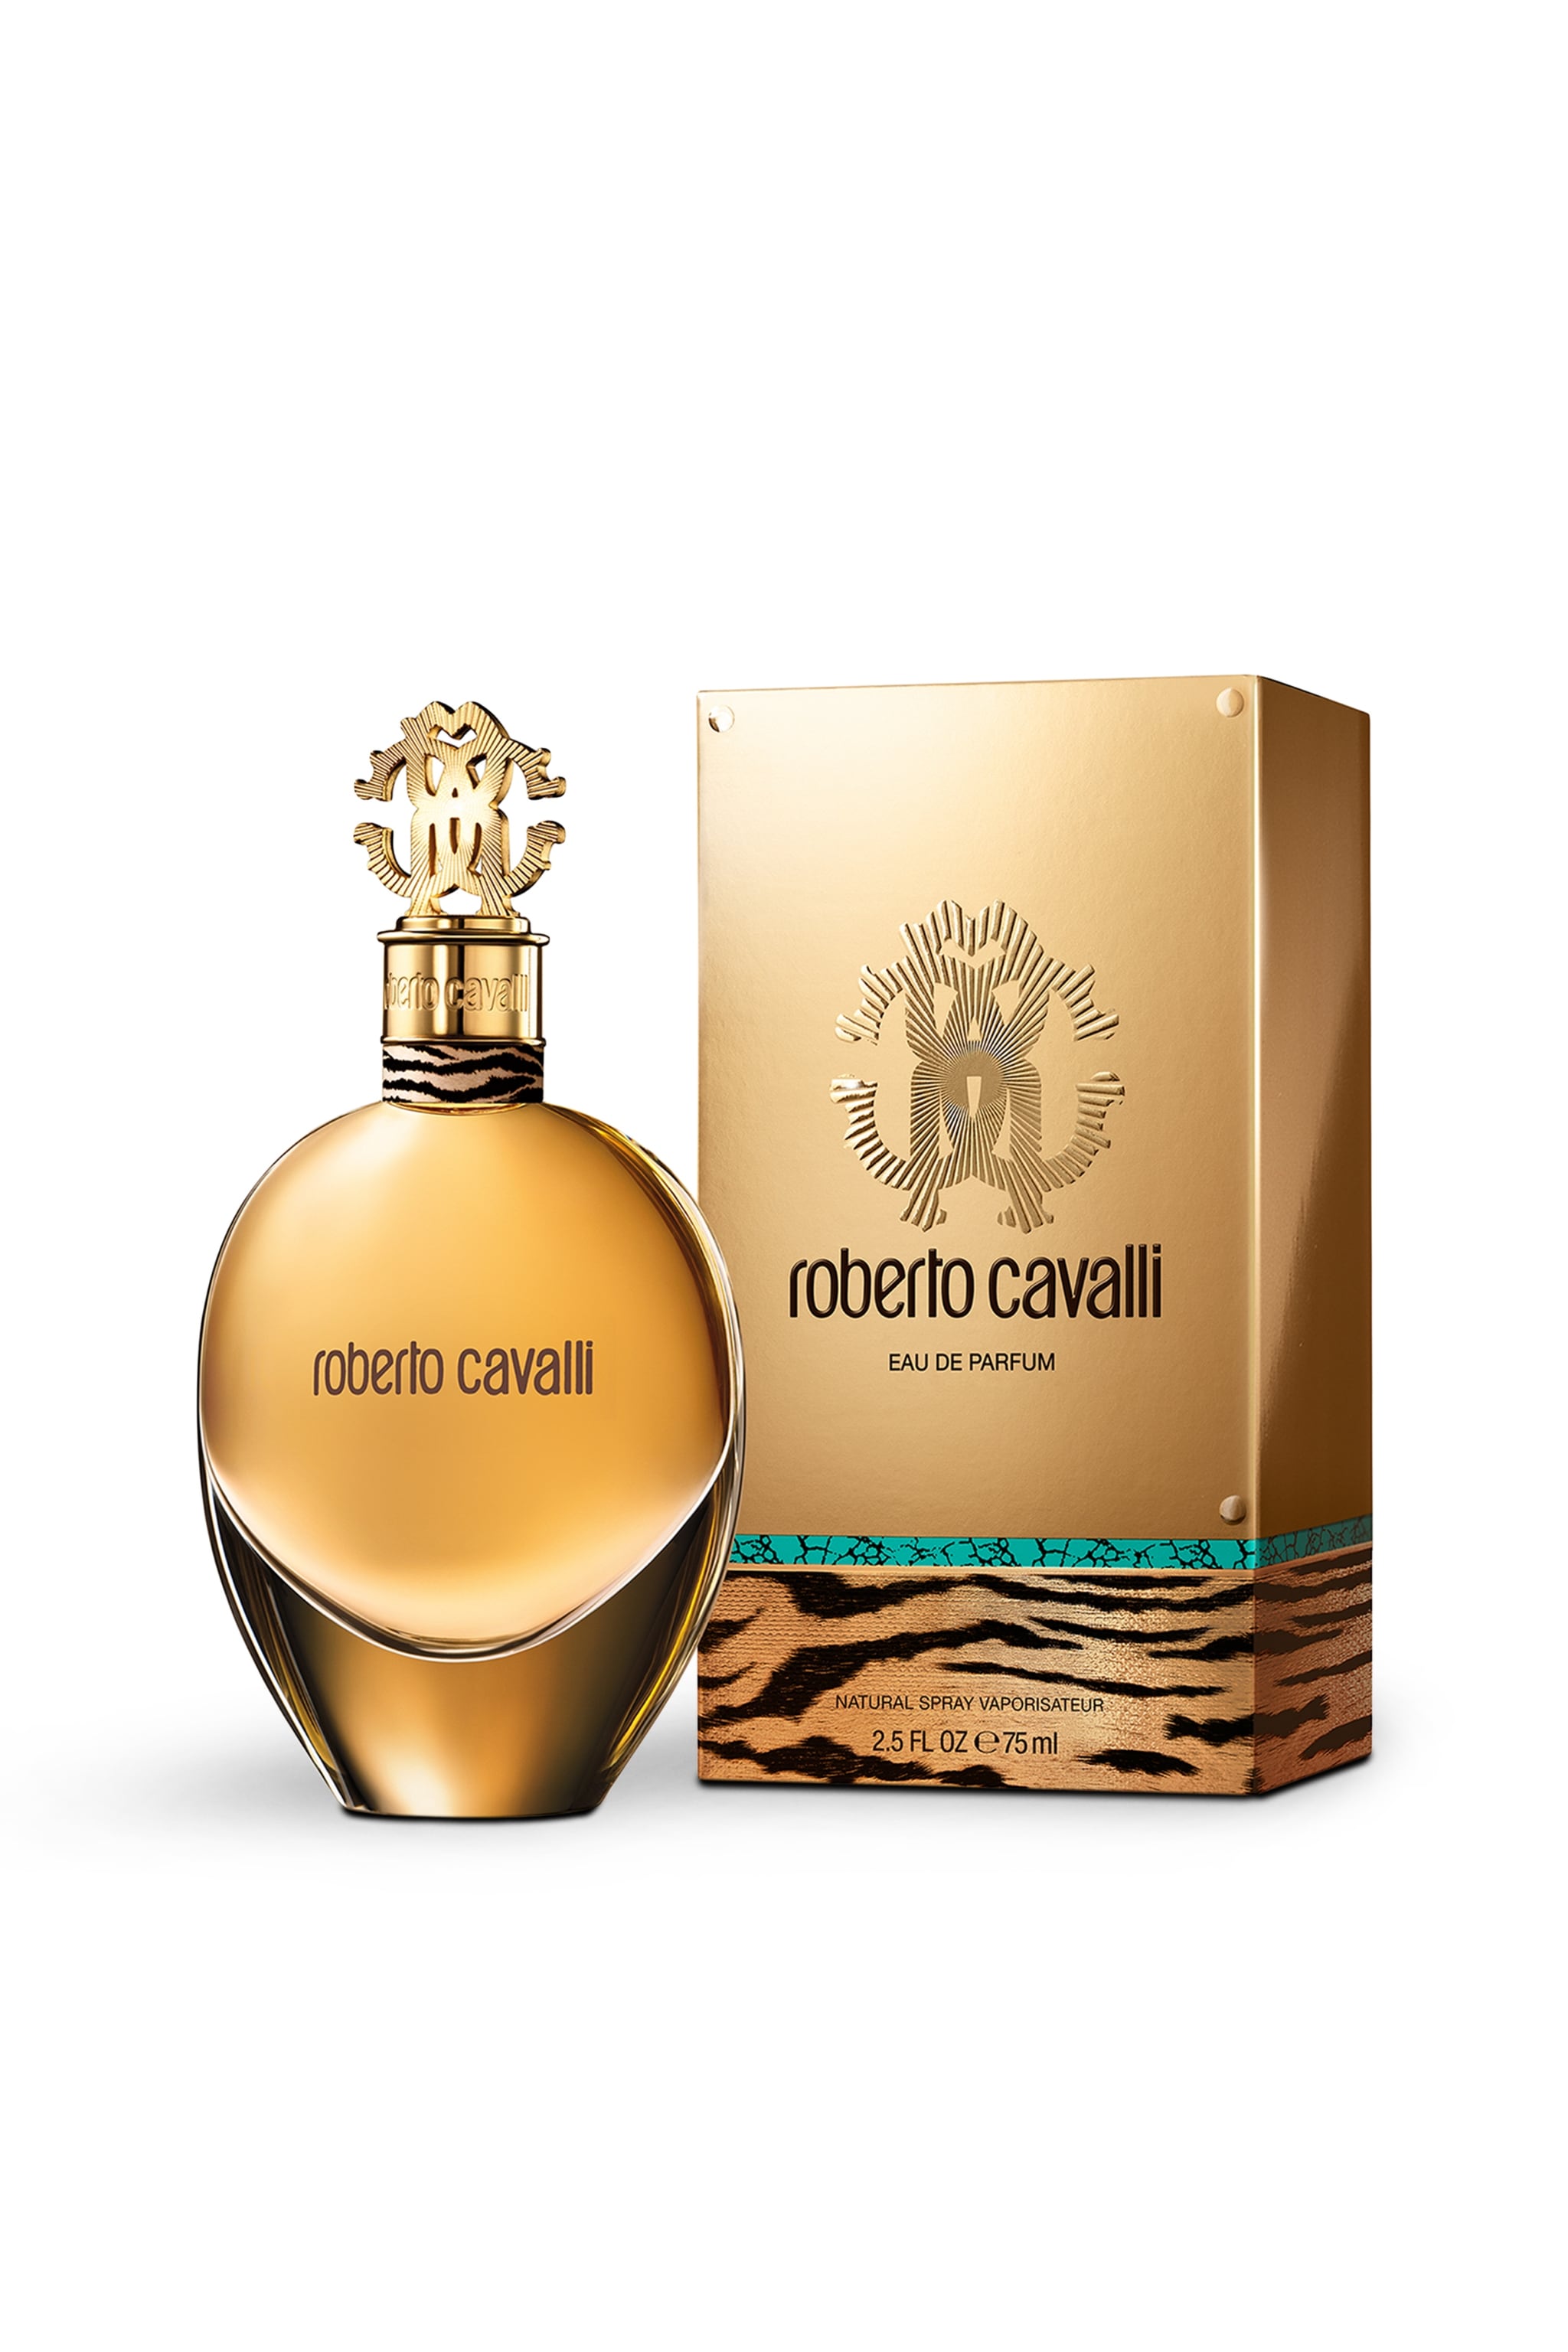 Roberto Cavalli Eau de Parfum - 75 ml